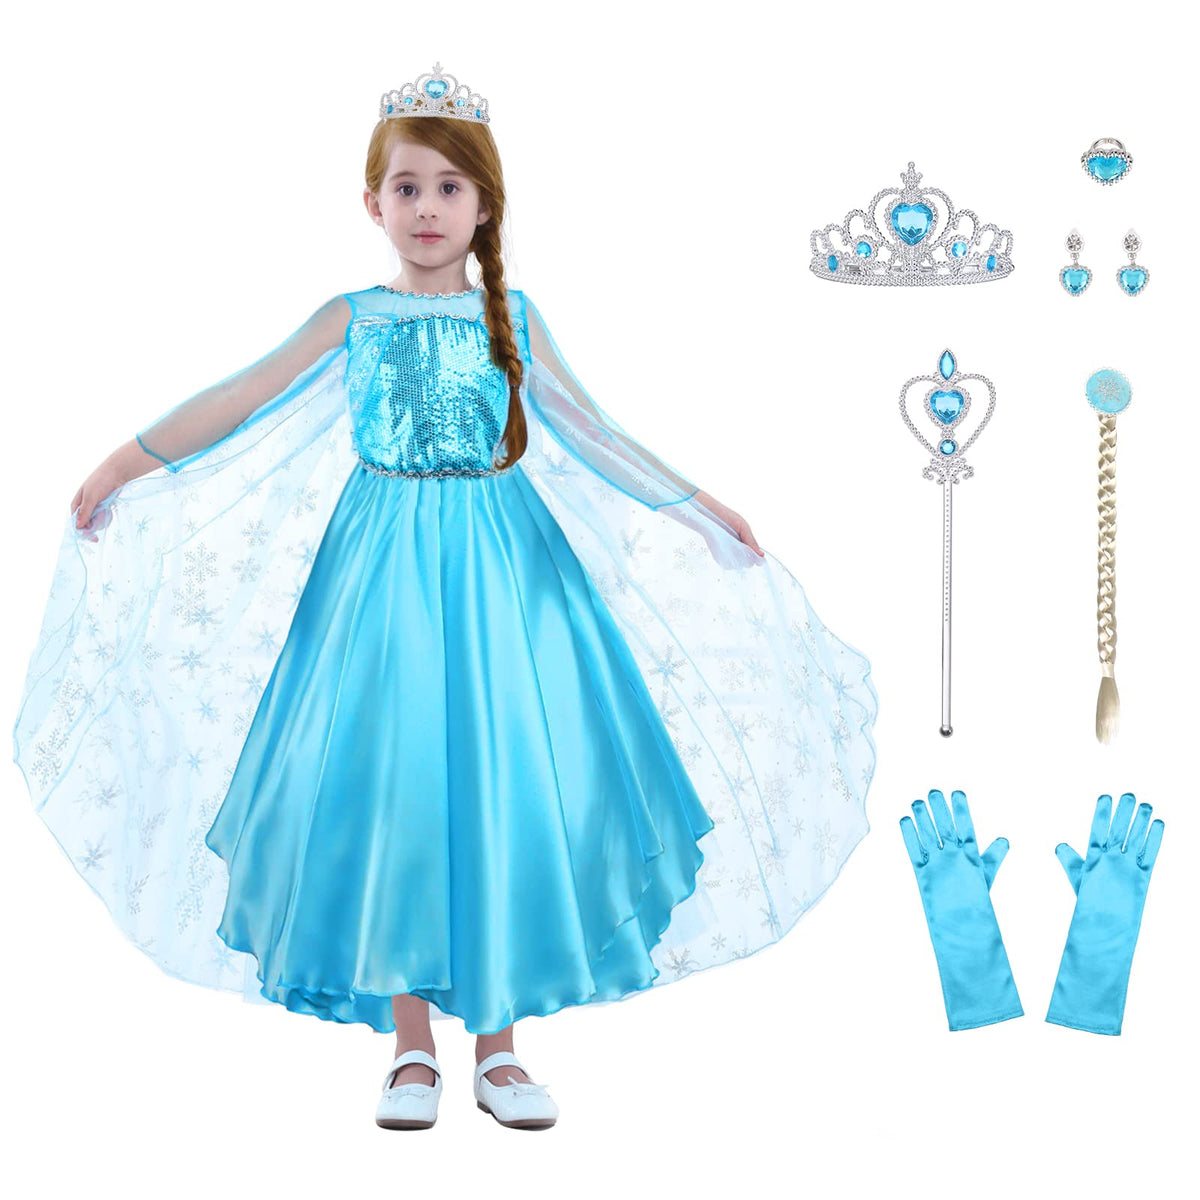 URAQT Elsa Dress, Elsa Princess Costume with Princess Crown Magic Wand Accessories, Elsa Anna Princess Dress Up for Girls, Shining Elsa Fancy Dress for Party, Bridesmaid, Halloween Cosplay (2-3 Years)